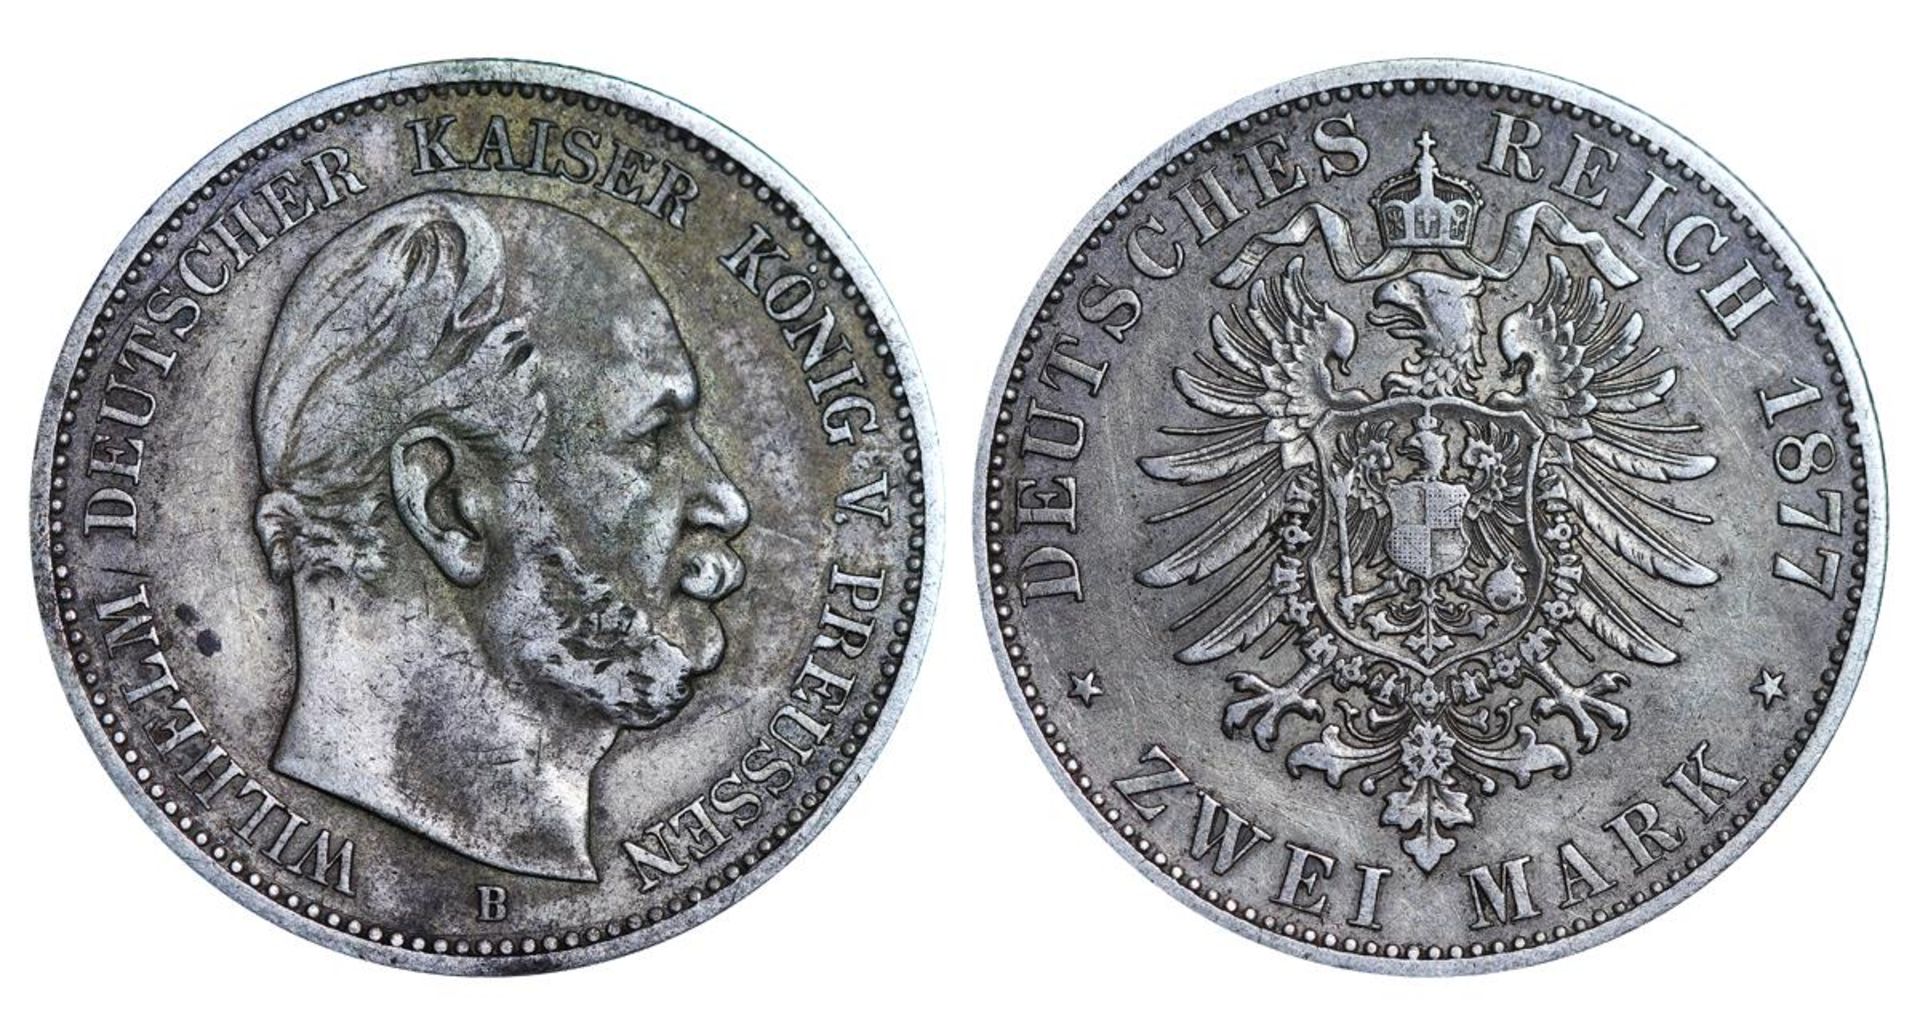 Kingdom of Prussia, 2 Marks, 1877 year, B